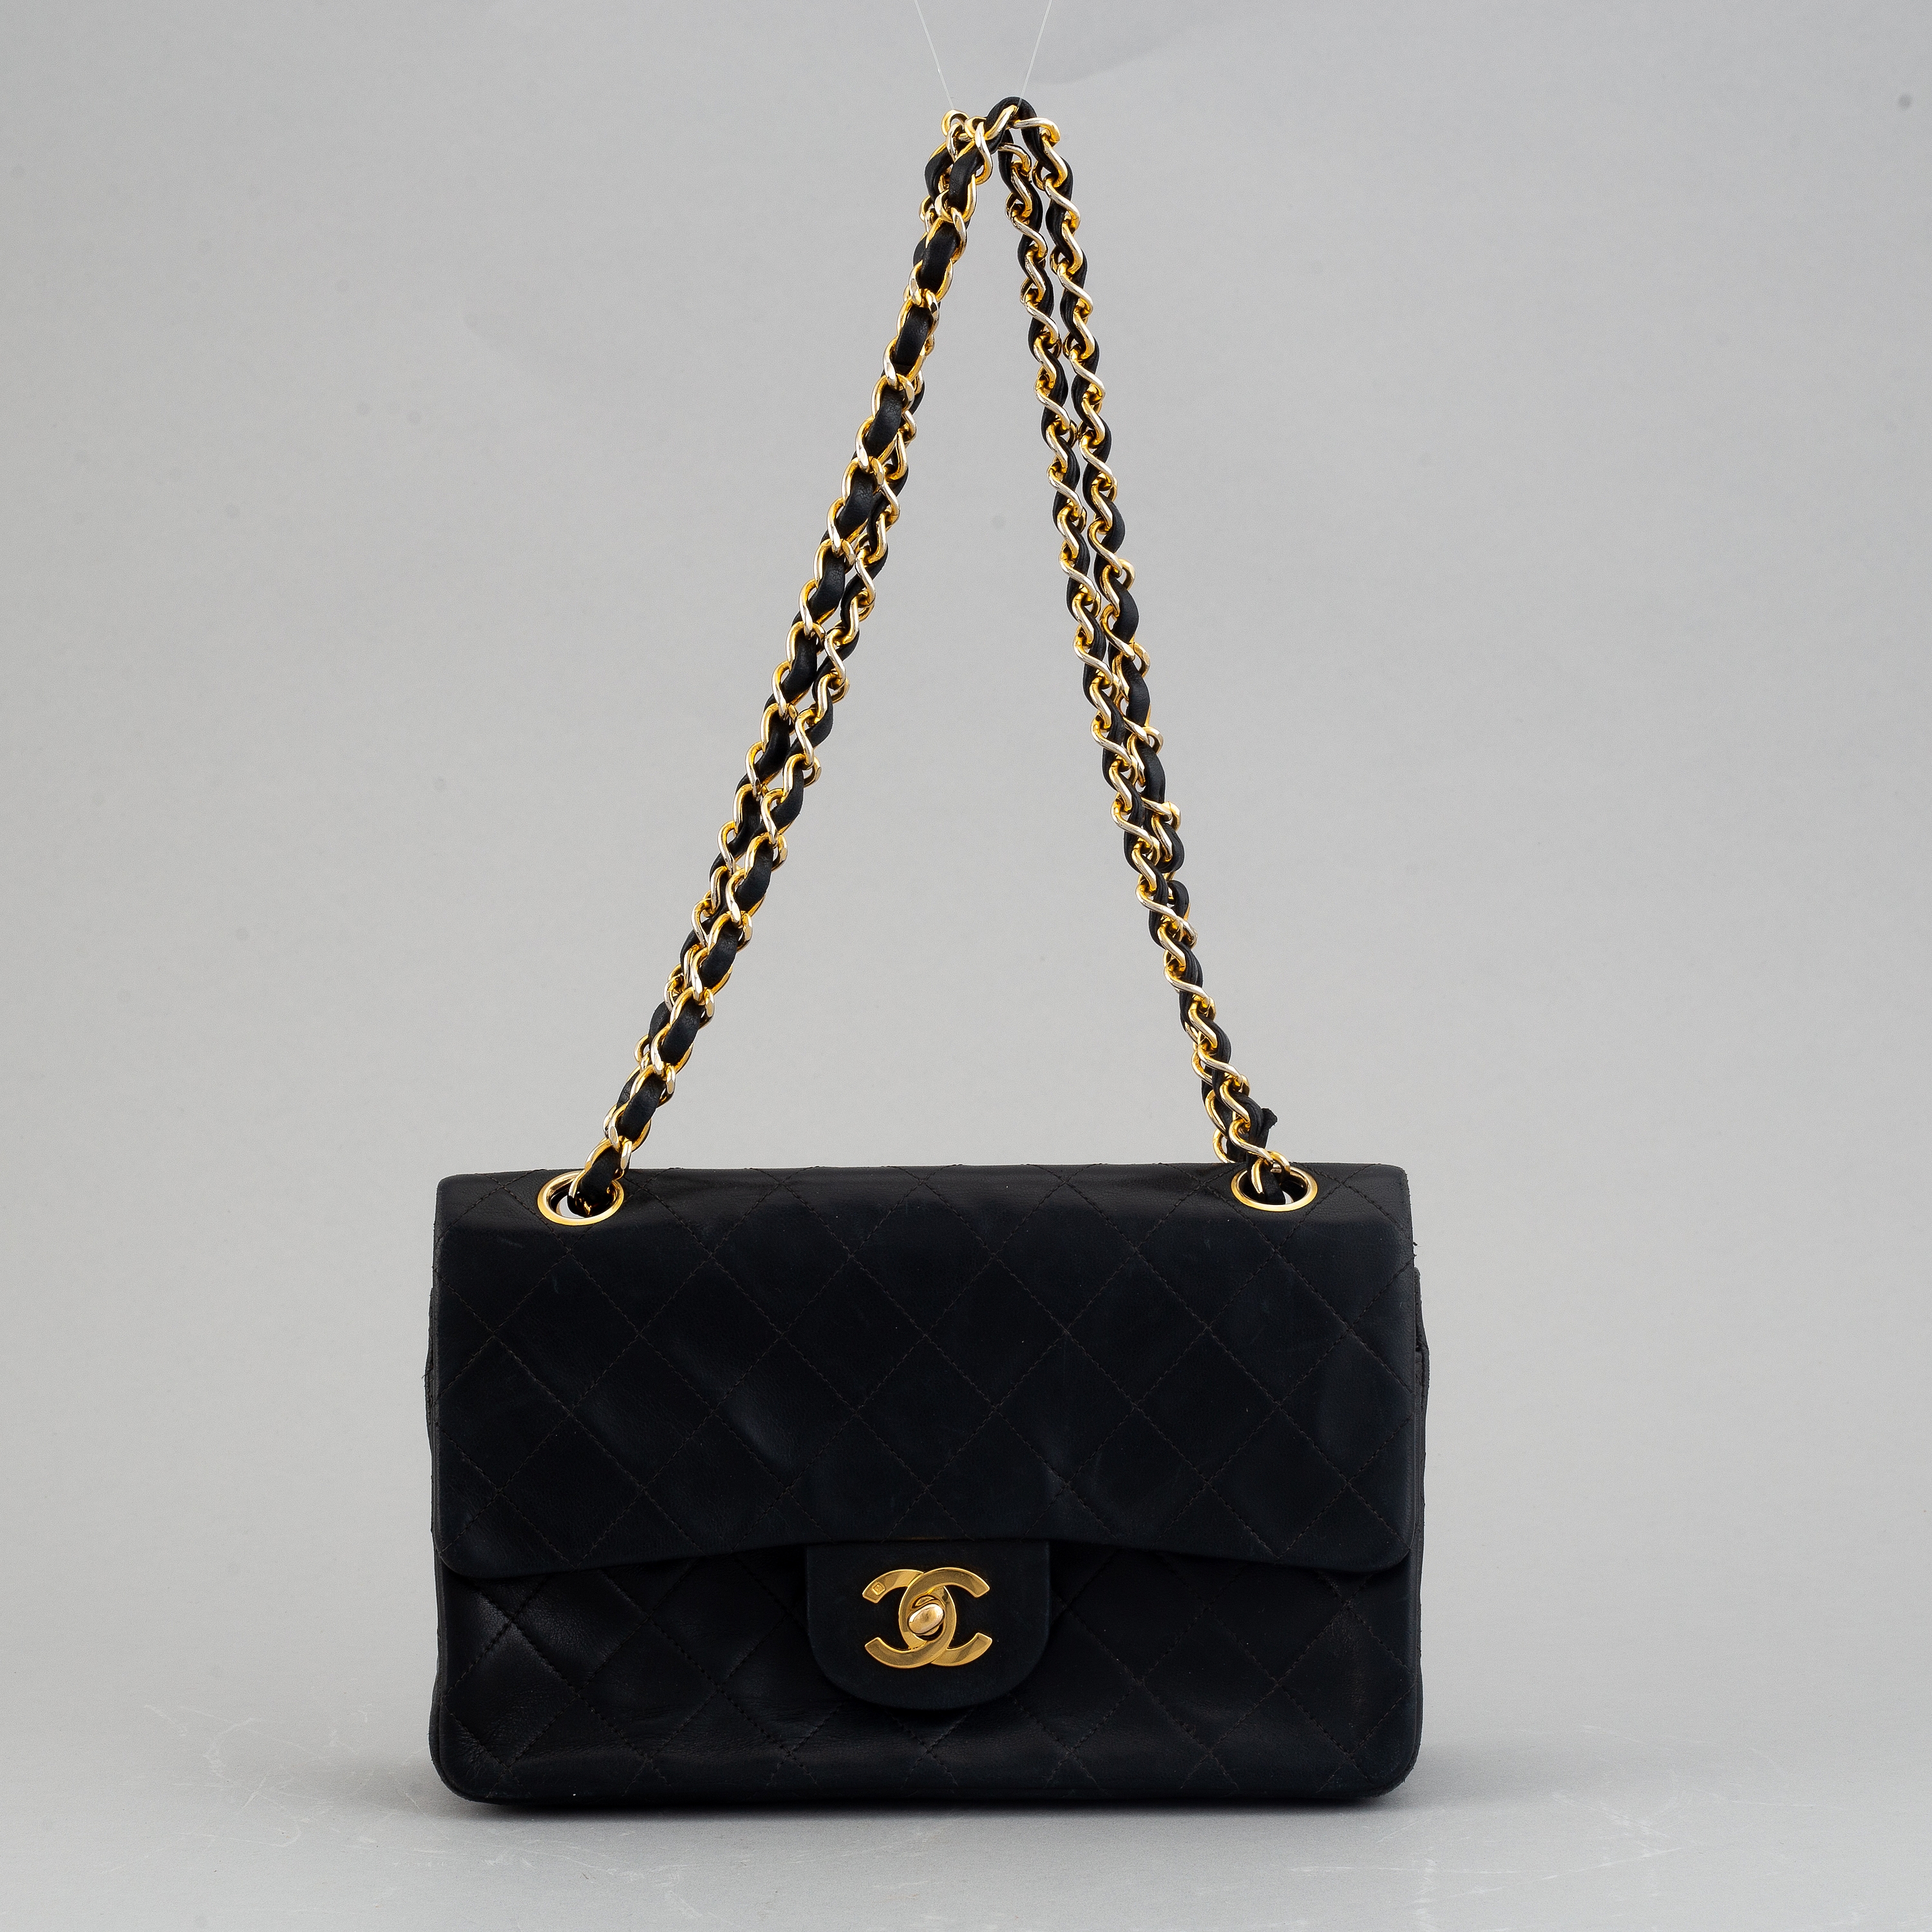 Chanel, Flap Bag